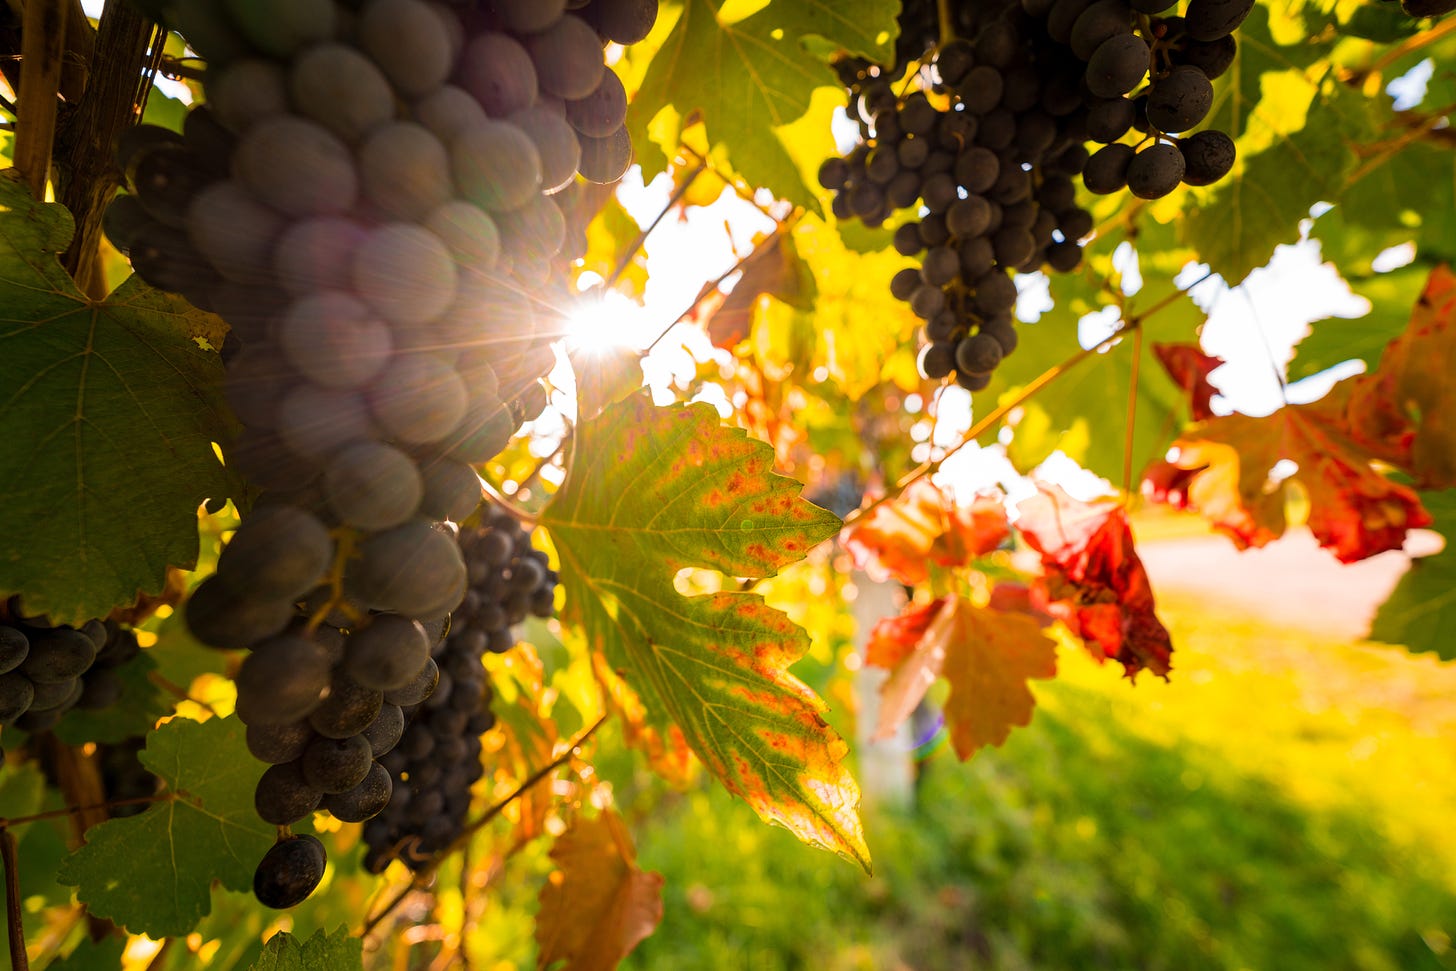 Sunlight shines through a grapevine.